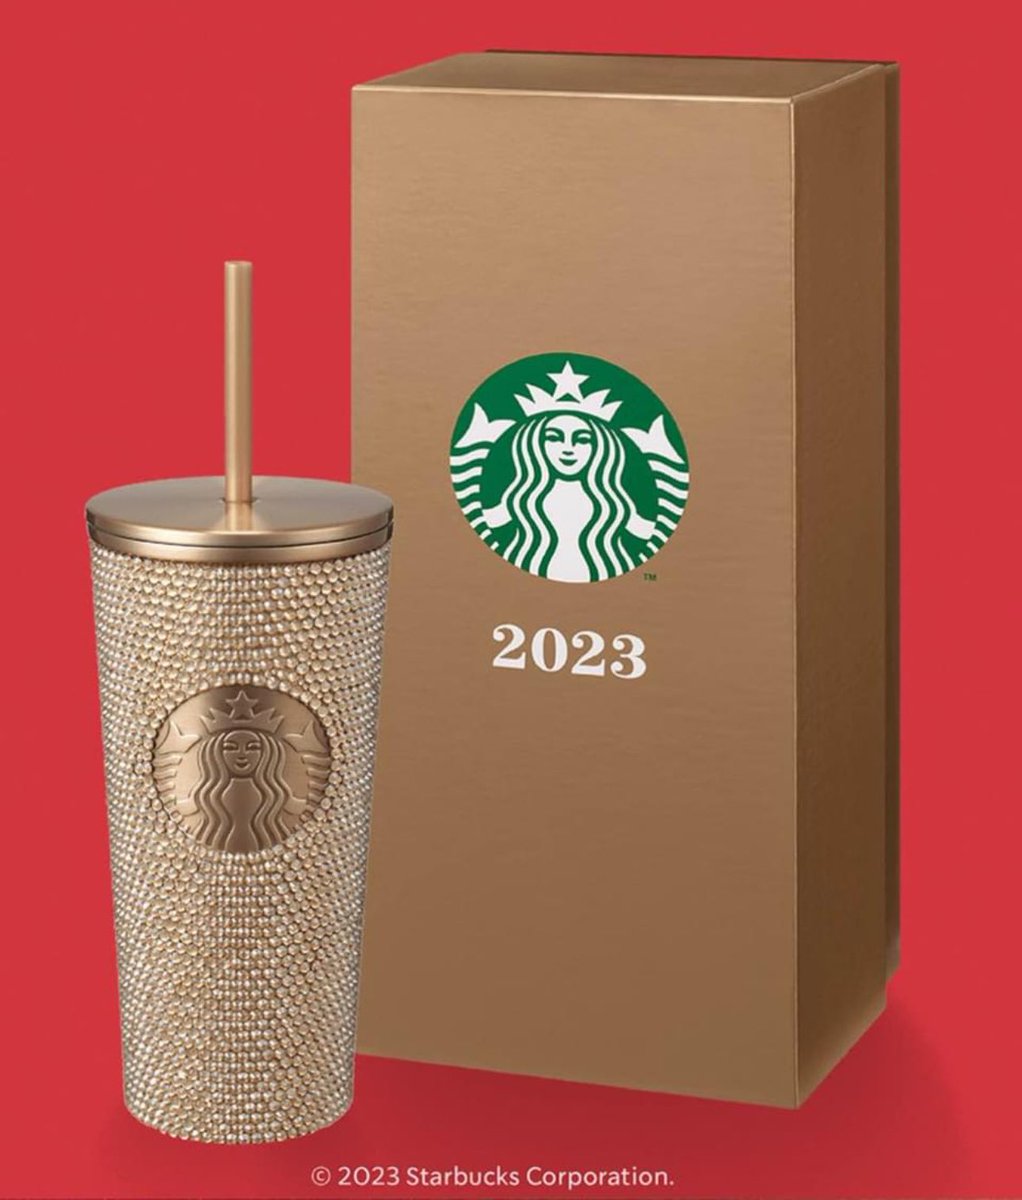 Champagne Gold
Bling Rhinestones
Cold Cup (16oz.)

รับหิ้วคับ ได้ของแน่นอน💯
มัดจำ2000 
ไม่ได้คืนเต็มจำนวน
นัดรับได้
#แก้วสตาร์บัค #แก้วstarbucks #StarbucksThailand #แก้วสตาบัค #ตลาดนัดStarbucks #Starbucks #รับหิ้วstarbucks #รับหิ้วแก้วสตาร์บัค